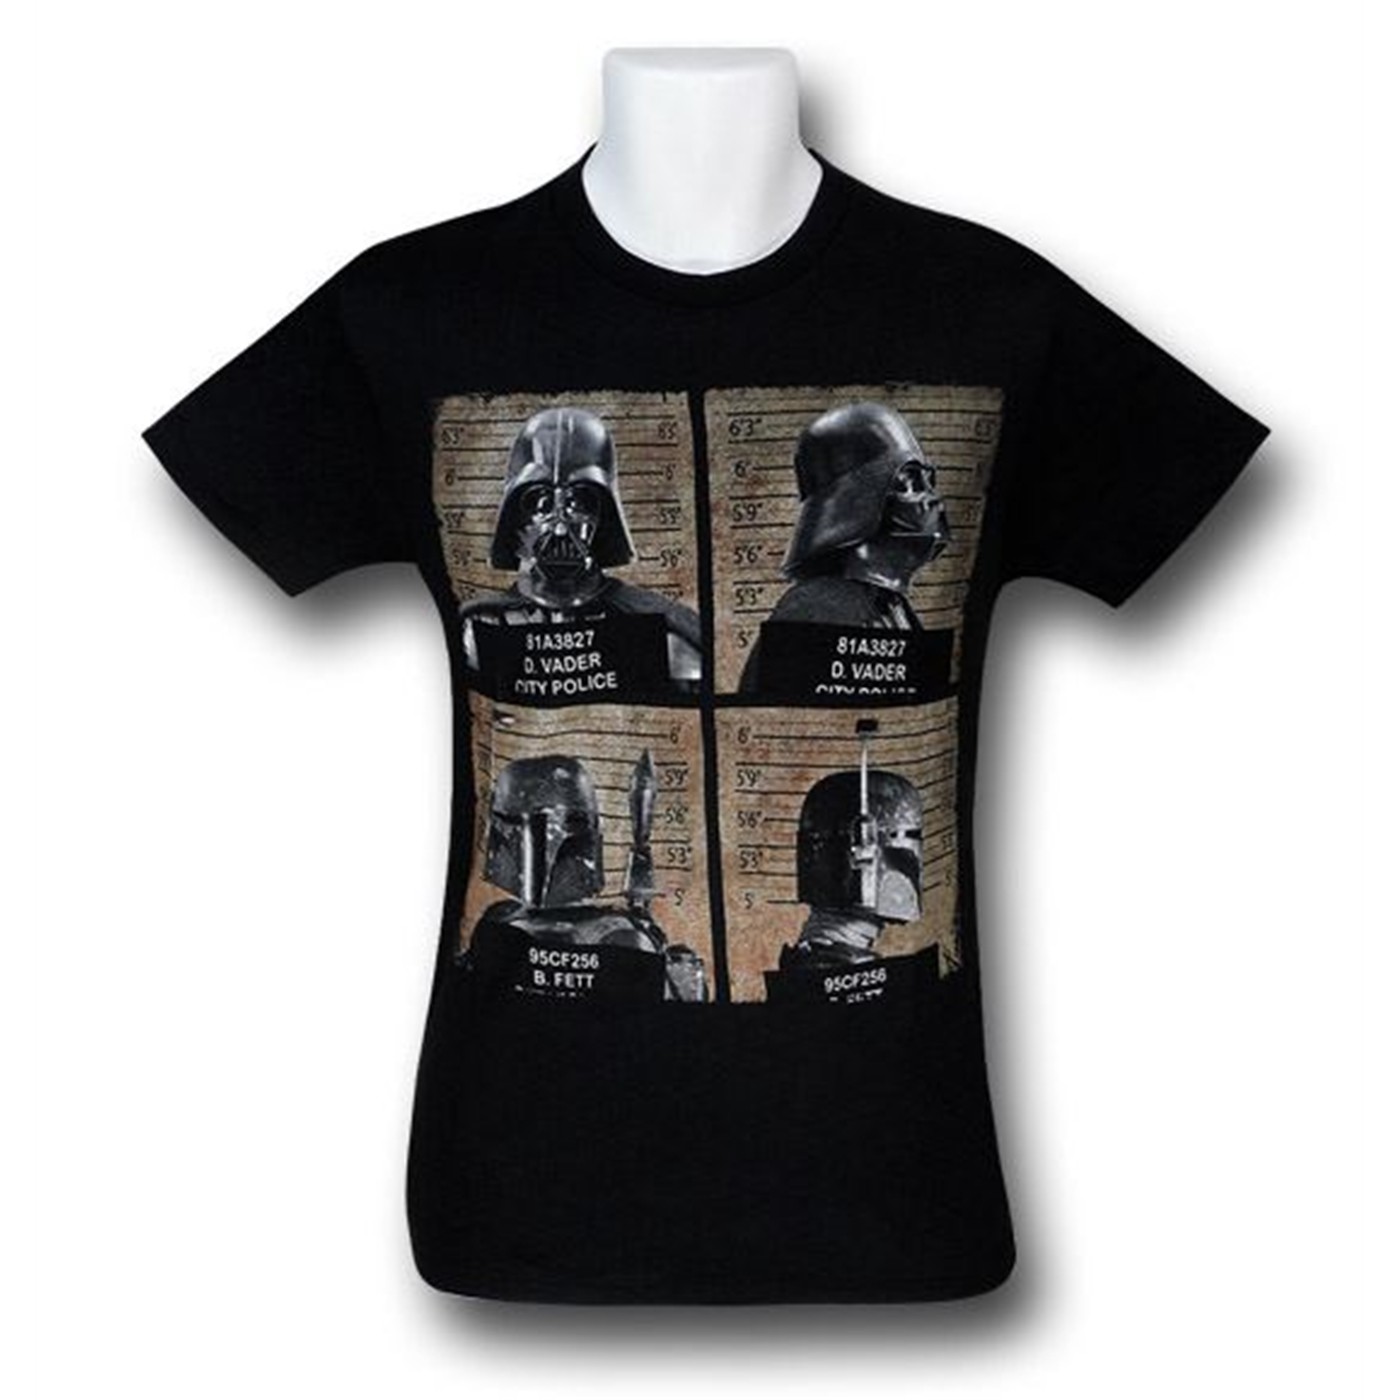 Star Wars Vader and Fett Mug Shots T-Shirt